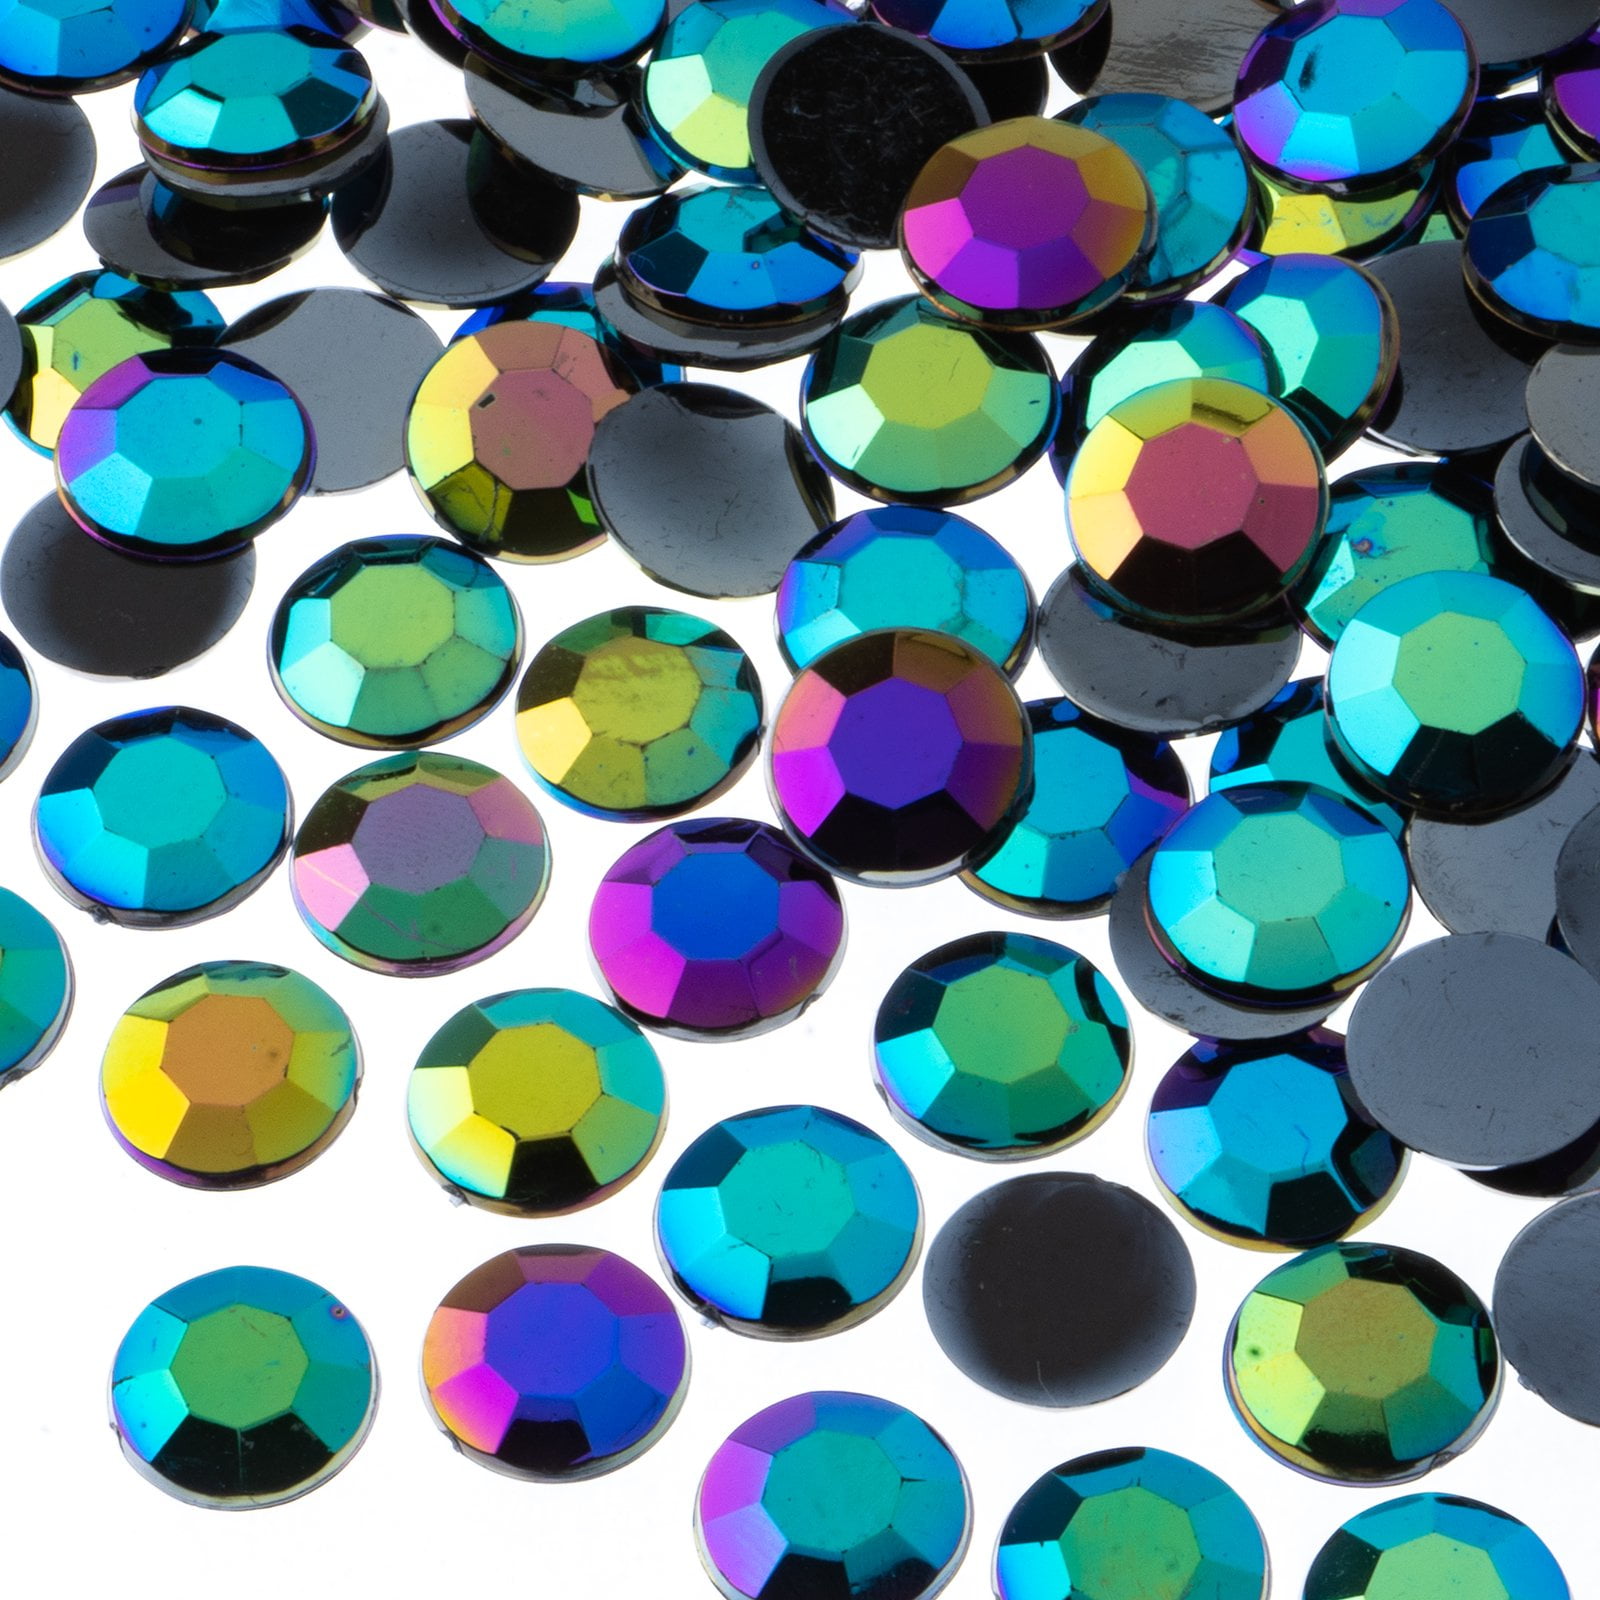 Acrylic Flatback Pearls – Suns Crystal & Bead Supply